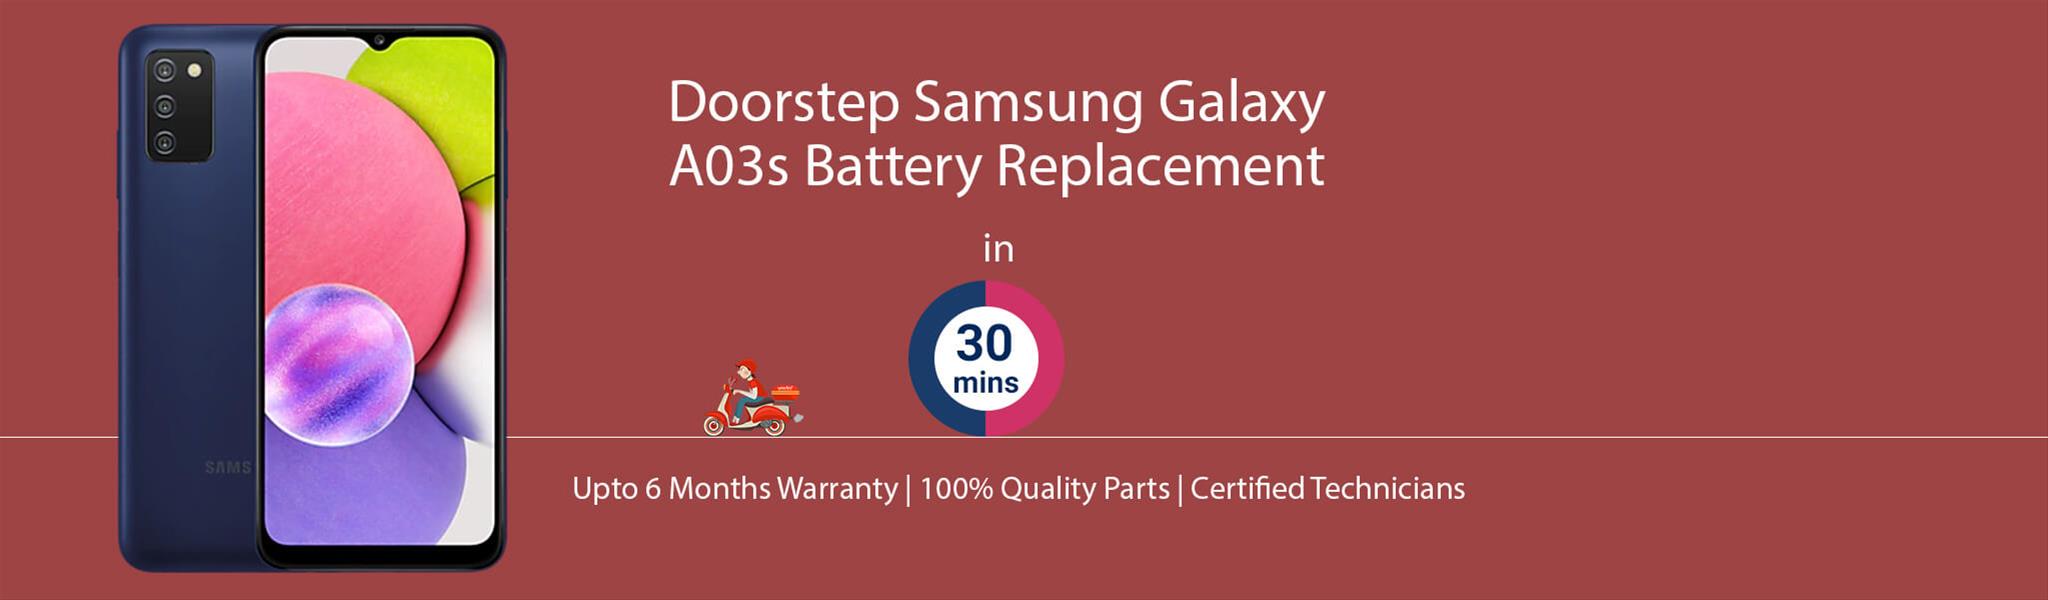 samsung-galaxy-a03s-battery-replacement.jpg